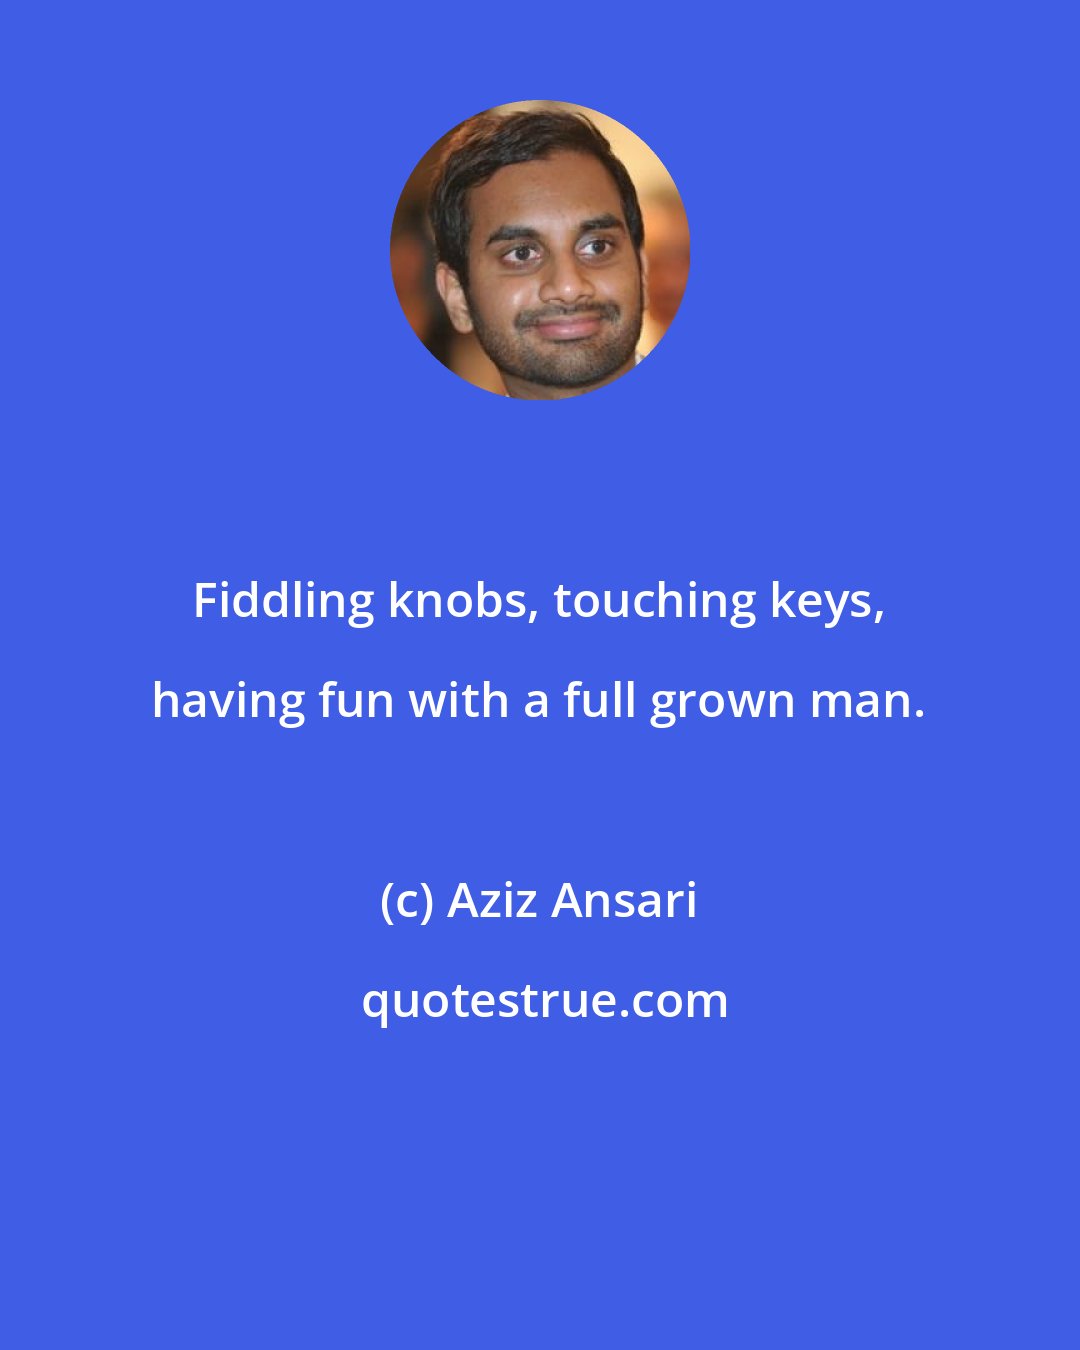 Aziz Ansari: Fiddling knobs, touching keys, having fun with a full grown man.